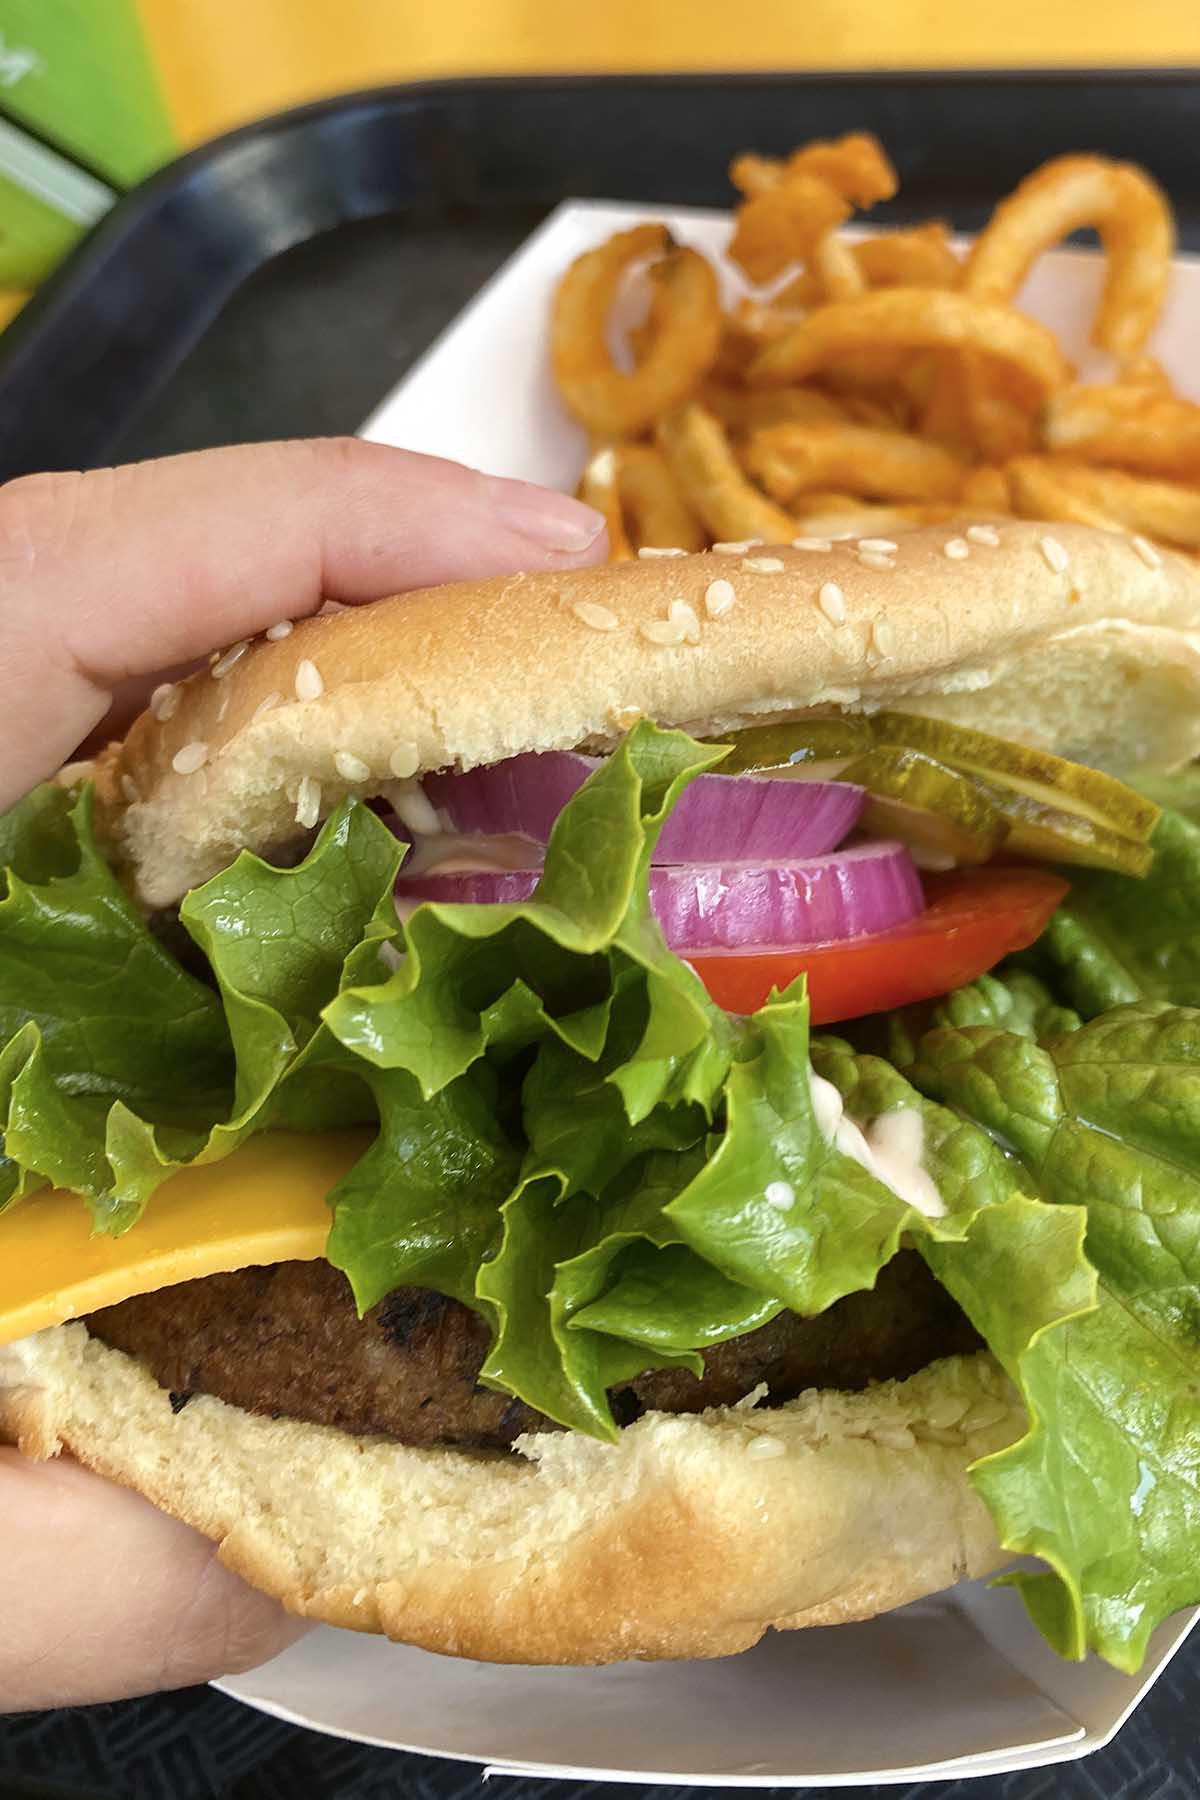 the vegan Wimpy's burger at Universal Studios